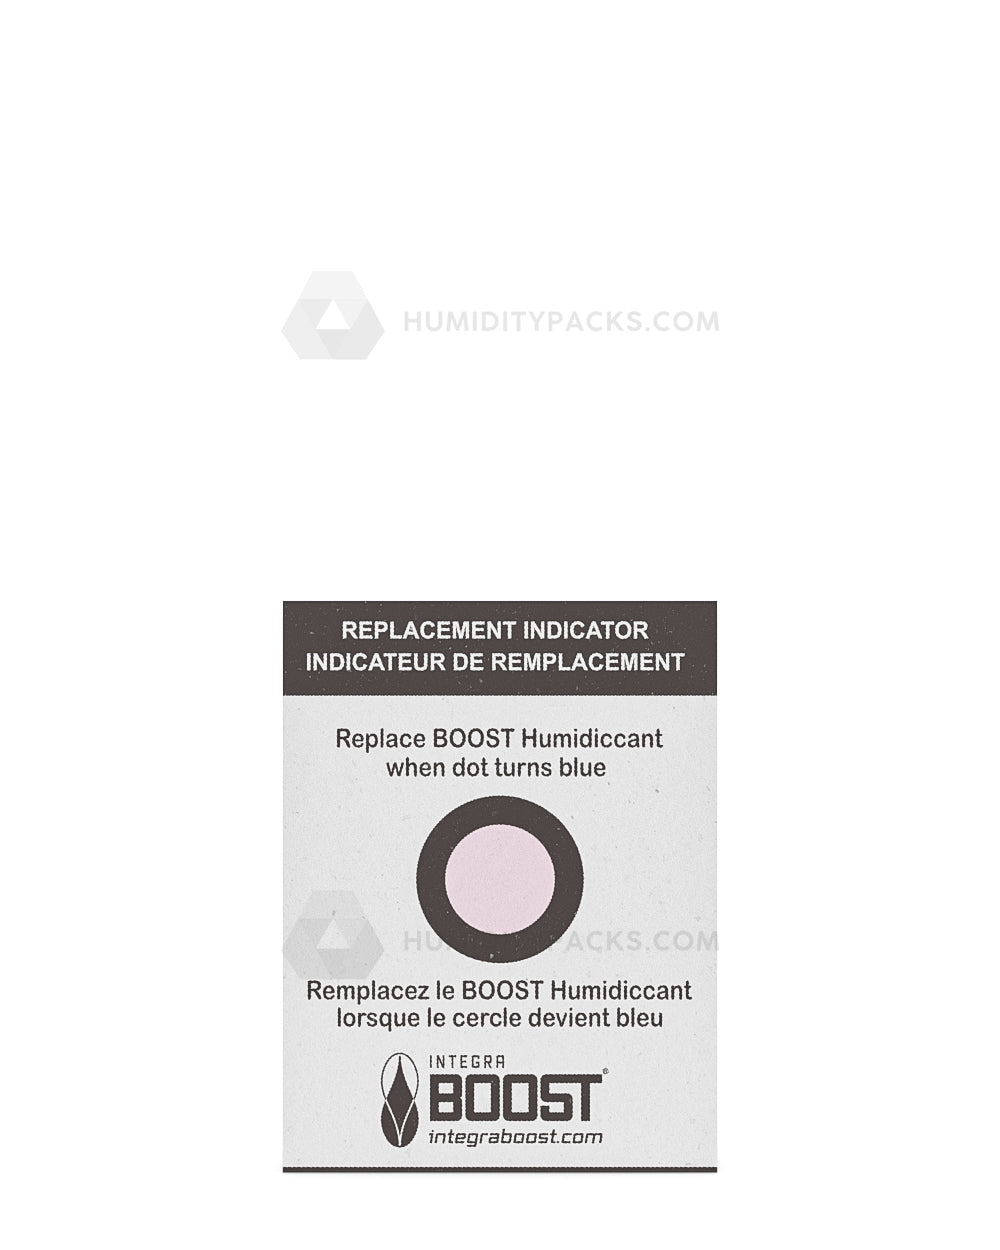 Integra Boost Humidity Packs 62% (8 gram) 50-Box Humidity Packs - 7